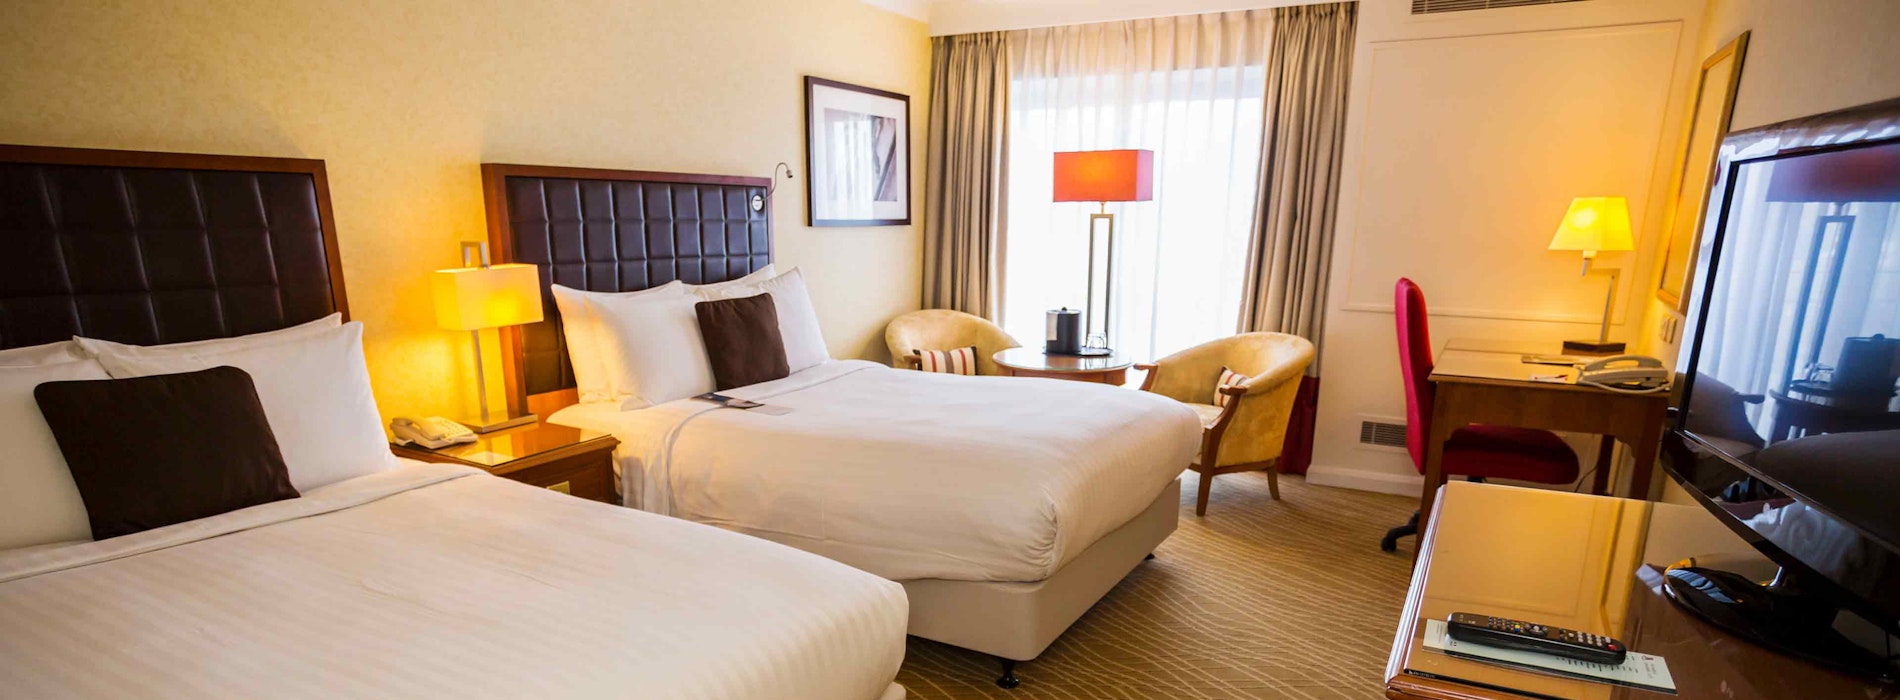 The Heathrow Windsor Marriott Hotel near LEGOLAND Windsor Resort